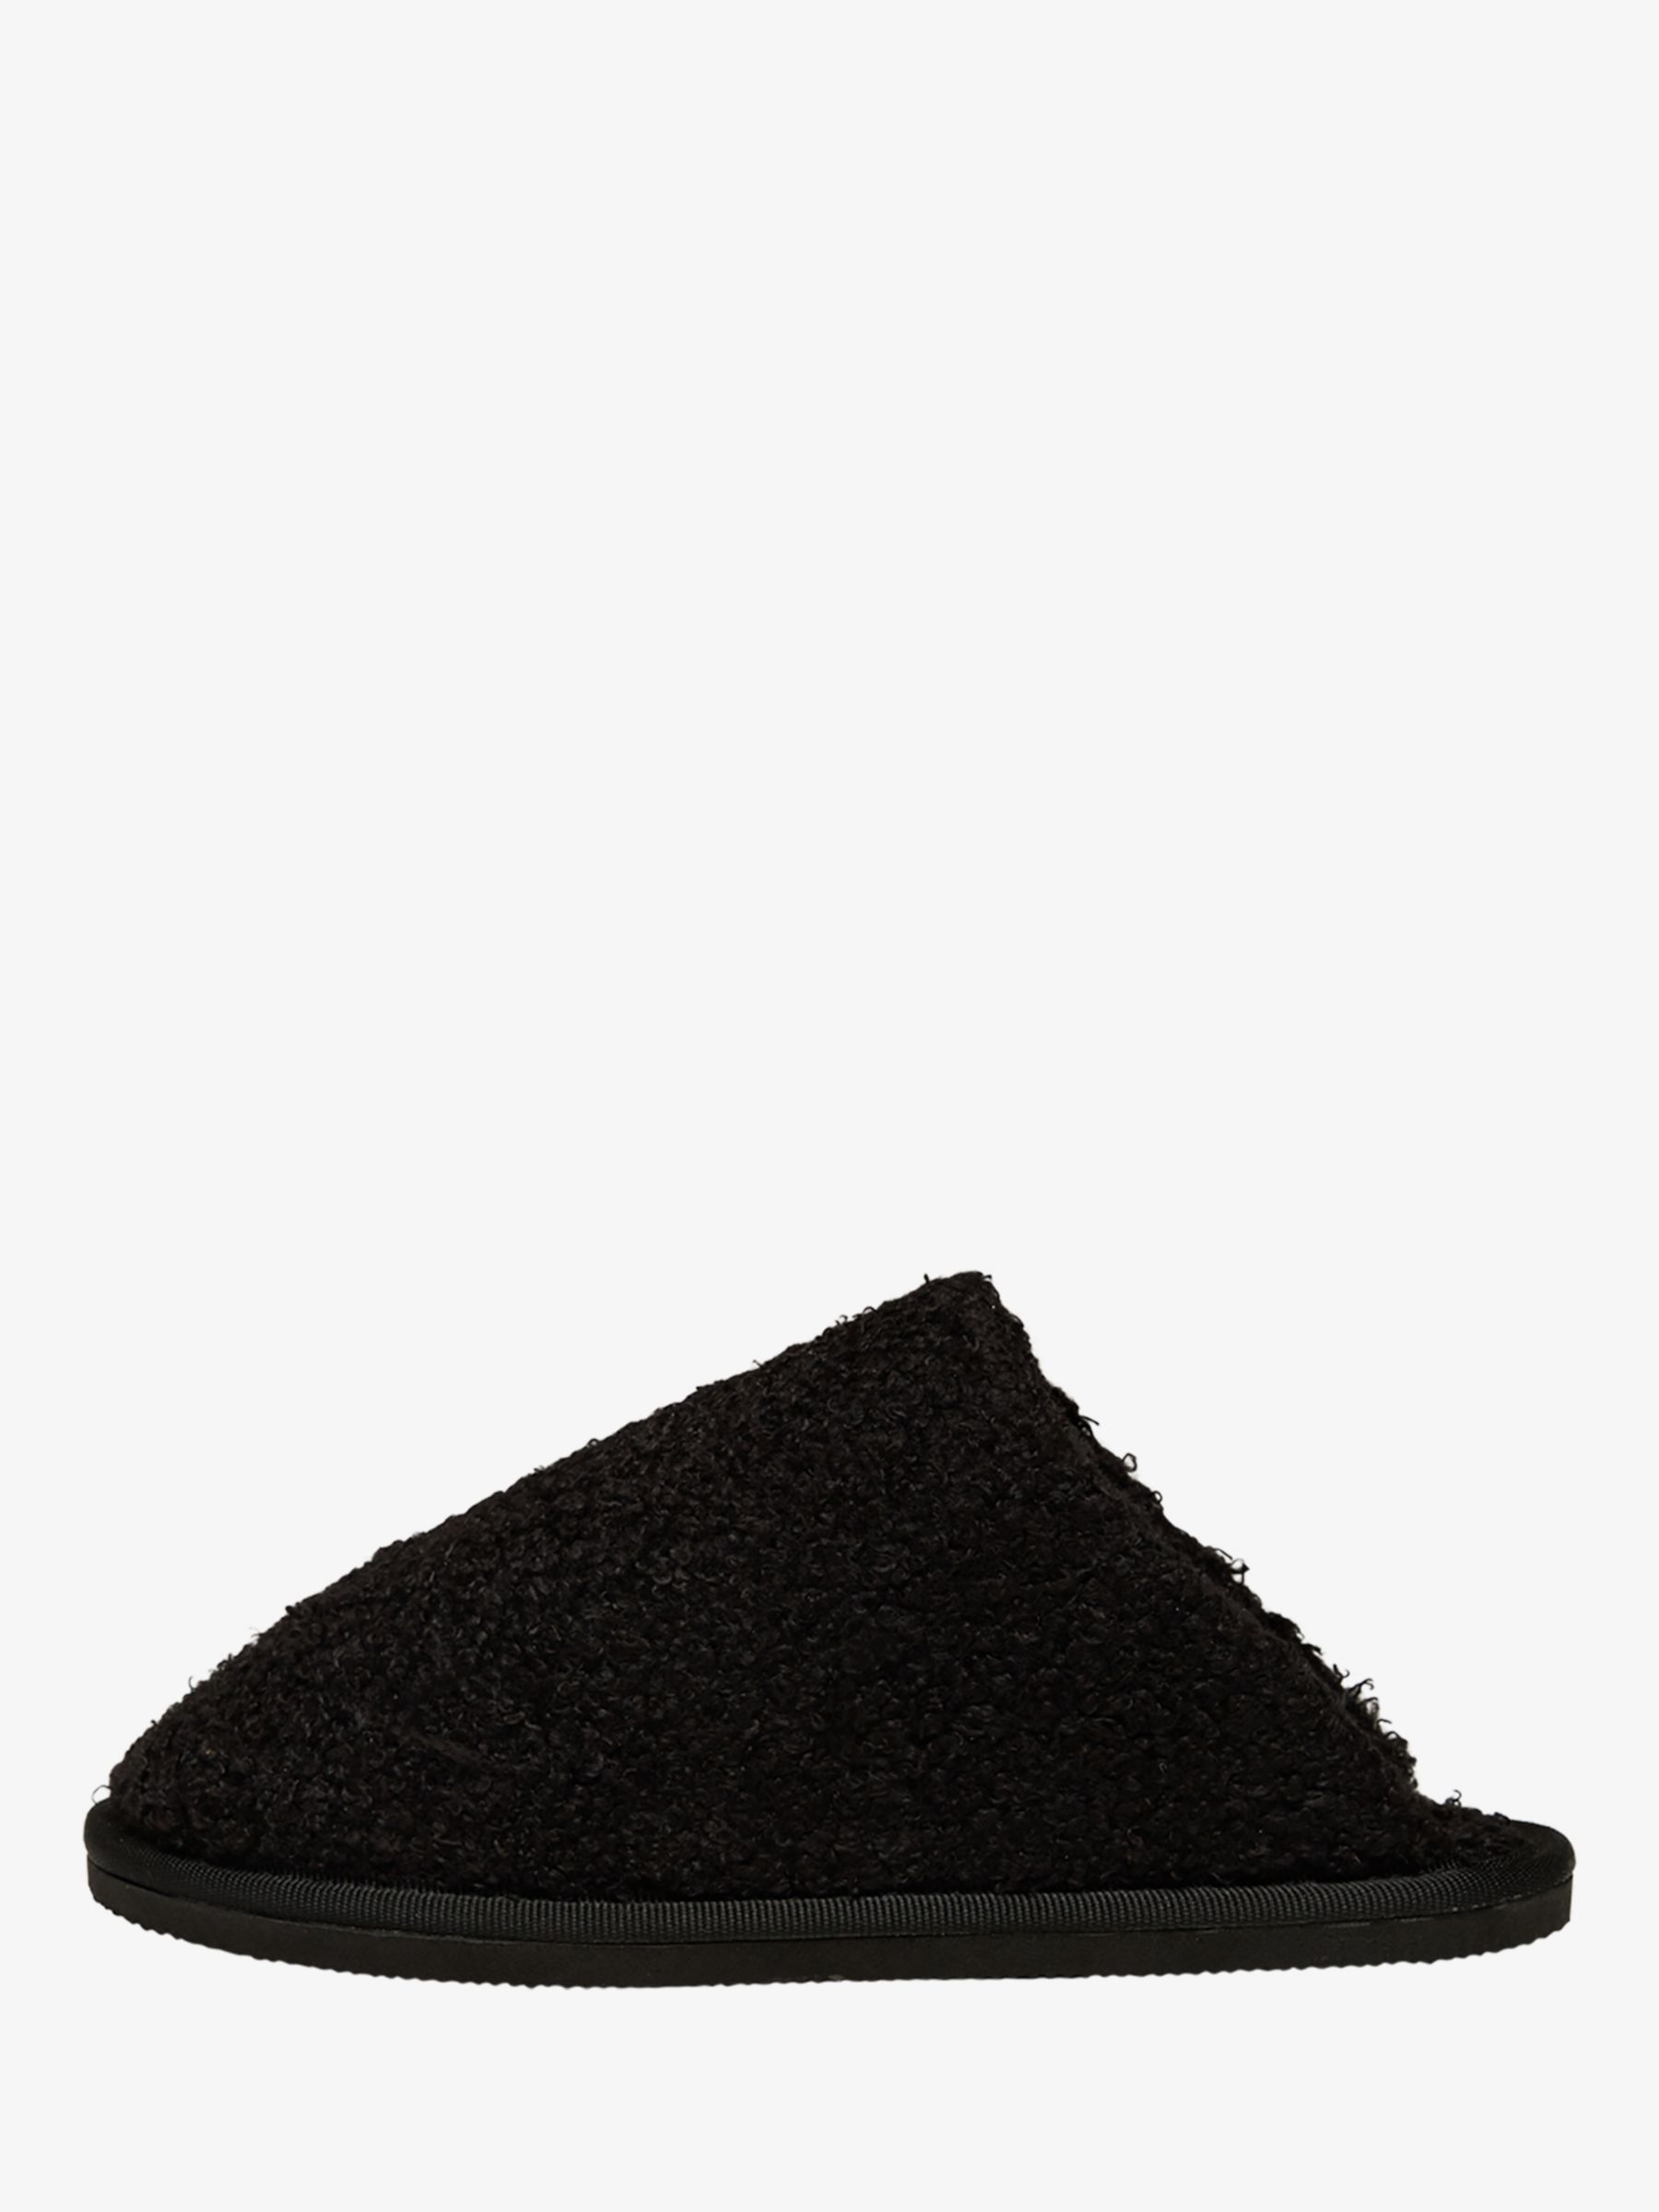 Unmade Copenhagen Benita Faux Fur Slippers, Black at John Lewis & Partners